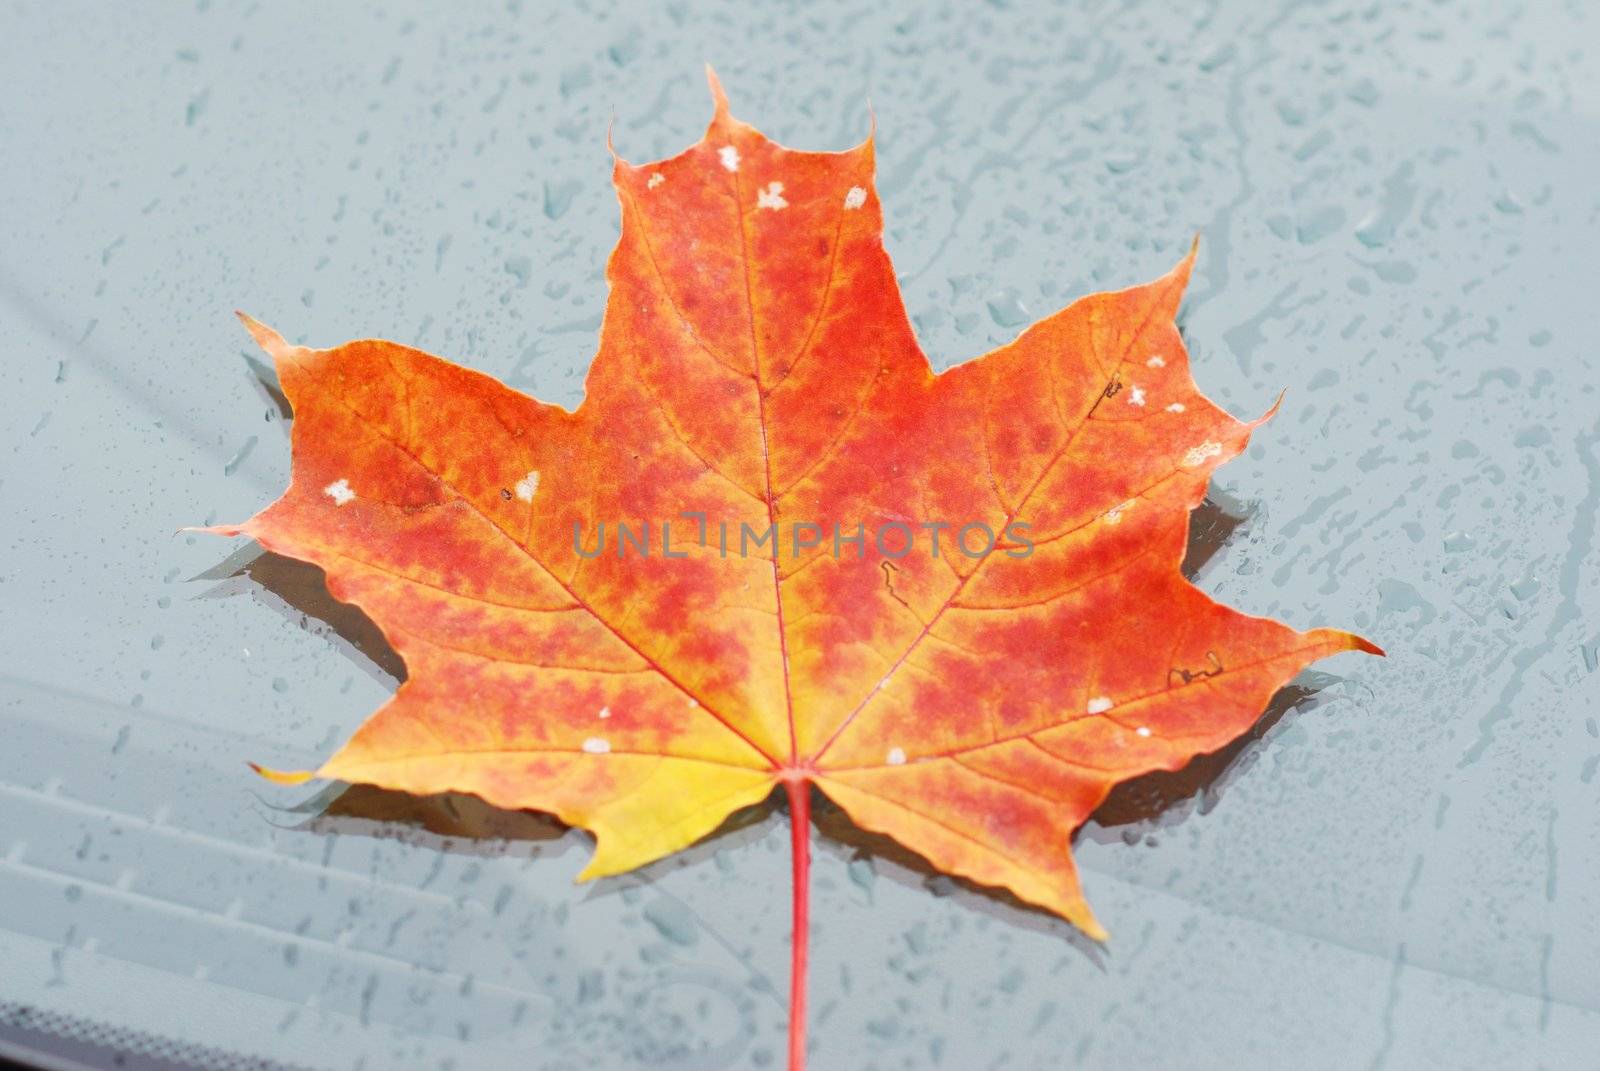 Autumn maple leaf on car window